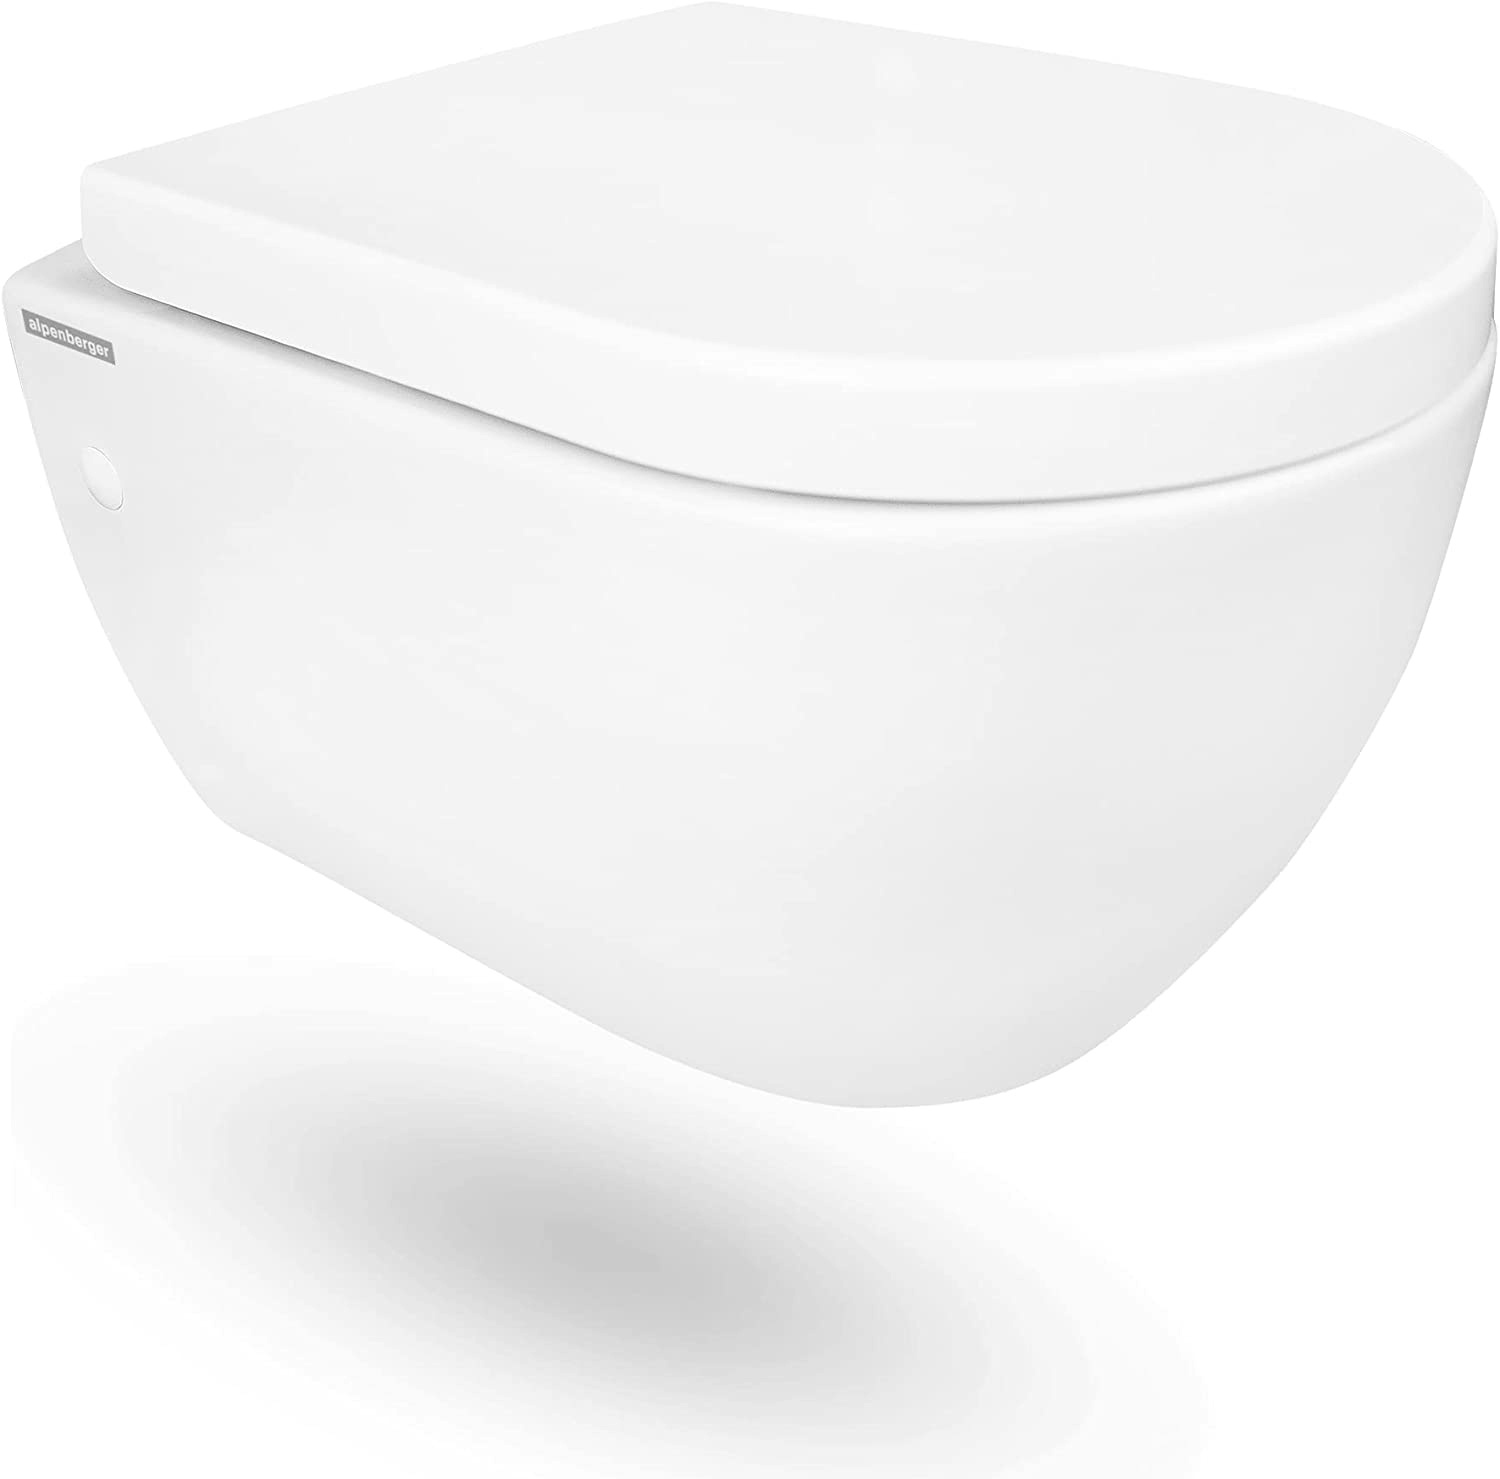 Alpenberger Toilette mit Taharet-Funktion | Spülrandloses Dusch WC Keramik Wand WC mit Nano | SoftClose WC-Sitz Absenkautomatik | Bidet Klo Made in EU